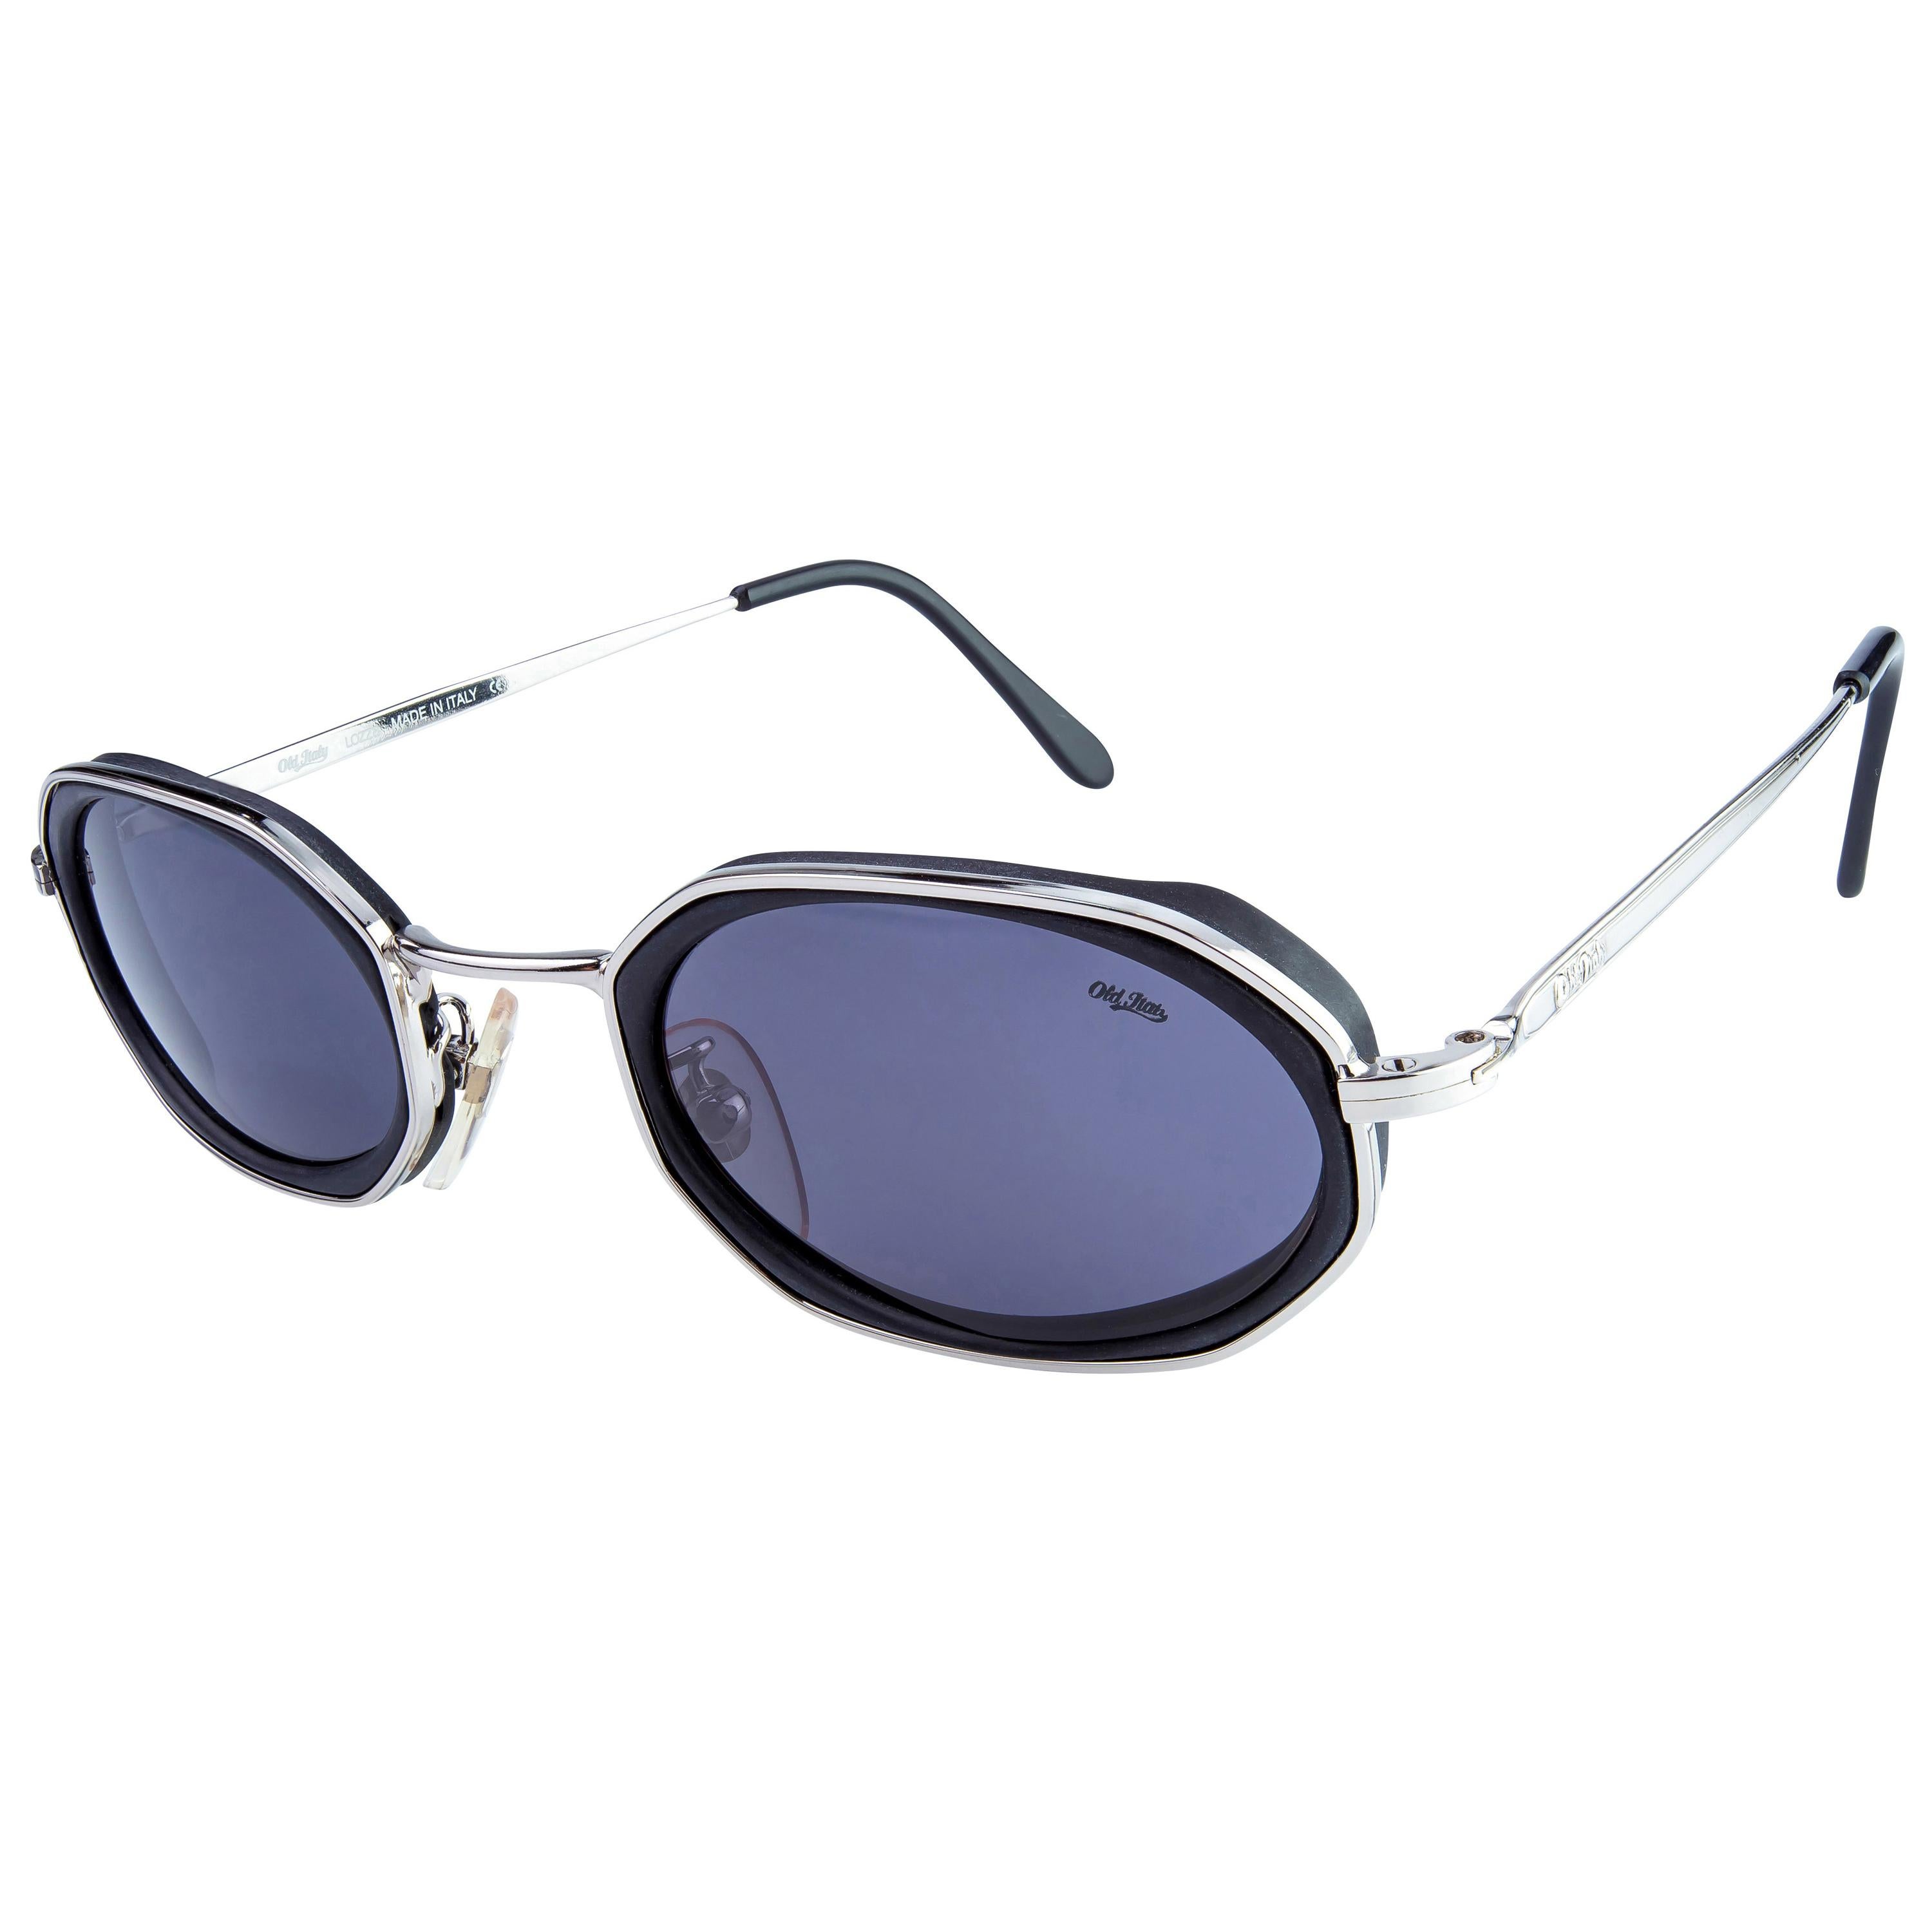 Hexagonal vintage sunglasses by Lozza, Italy 80s